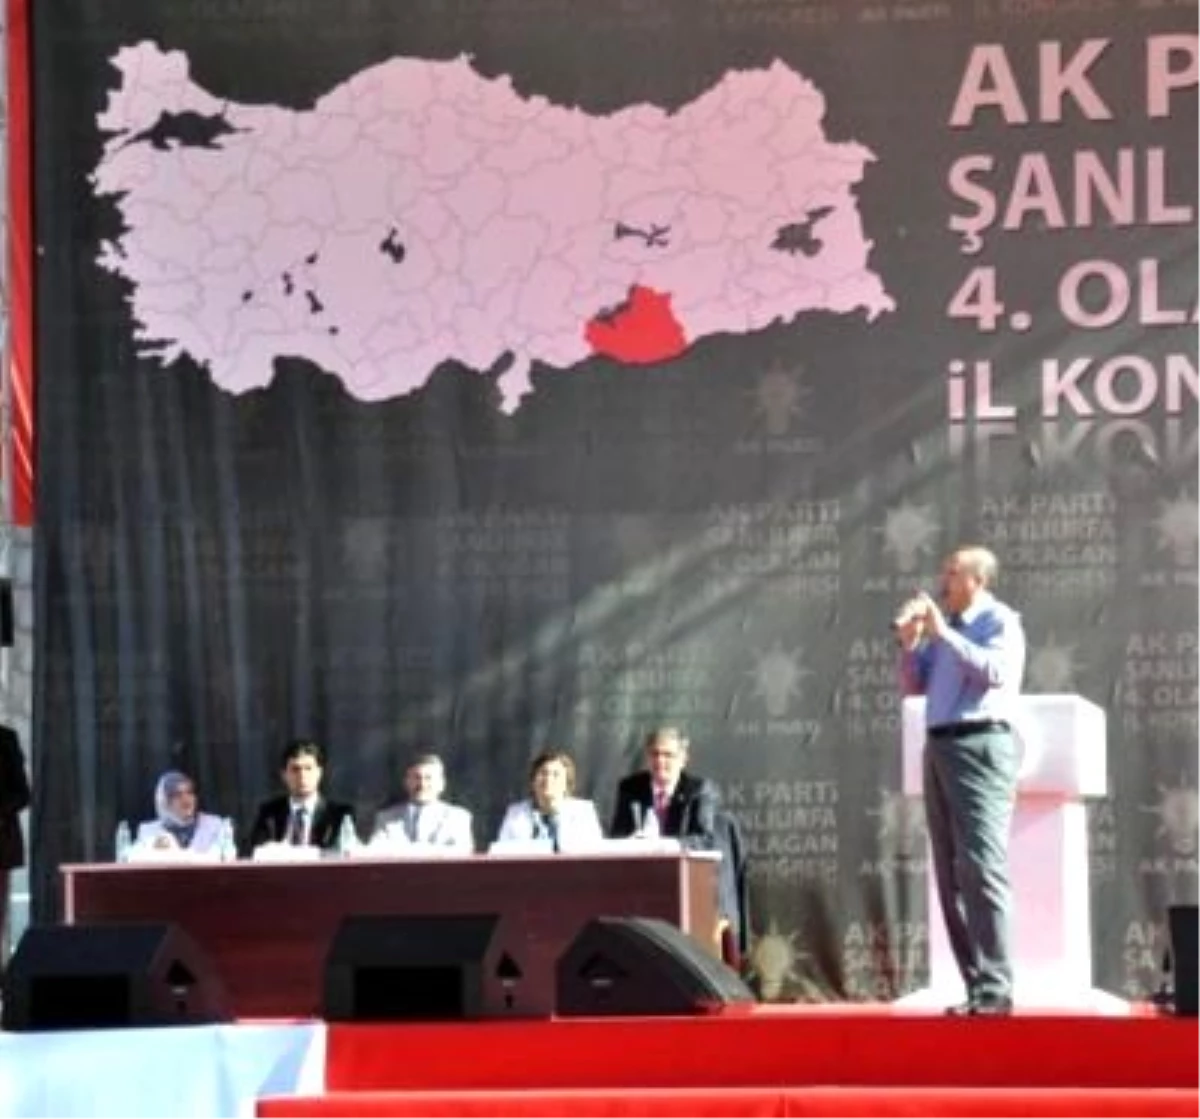 AK Parti Şanlıurfa İl Kongresi